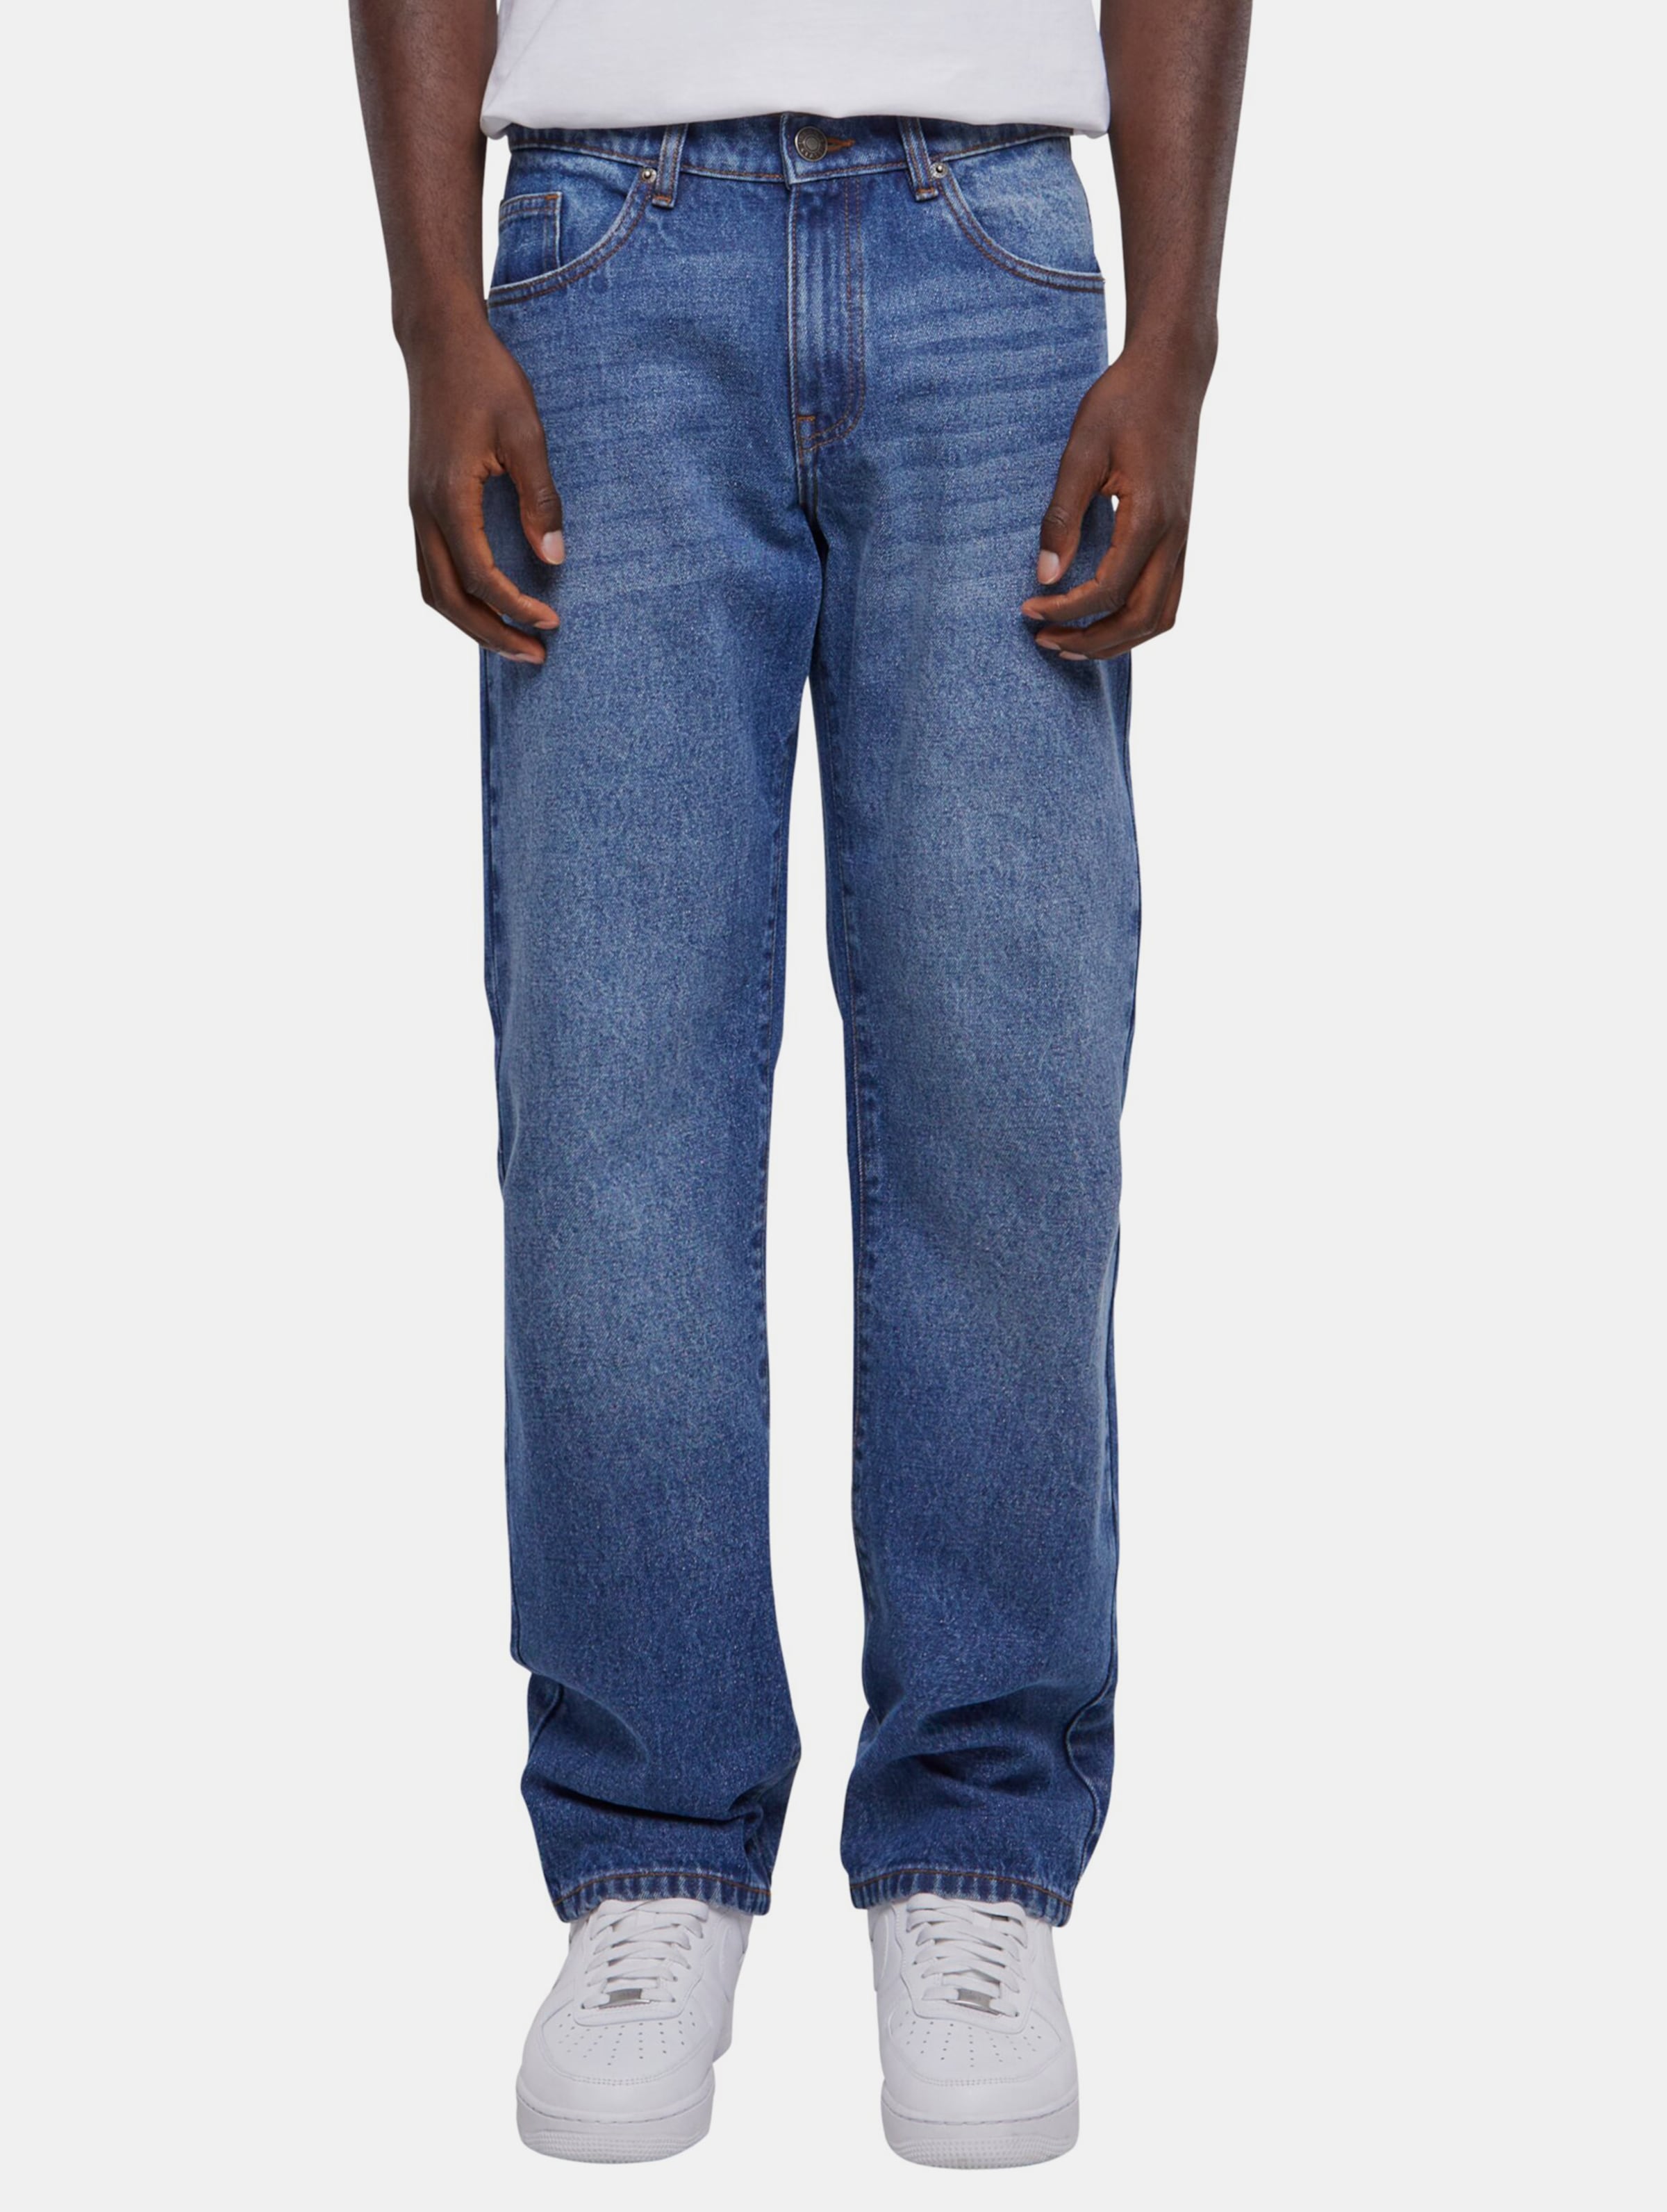 Urban Classics - Heavy Ounce Straight Fit Jeans Broek rechte pijpen - Taille, 28 inch - Blauw